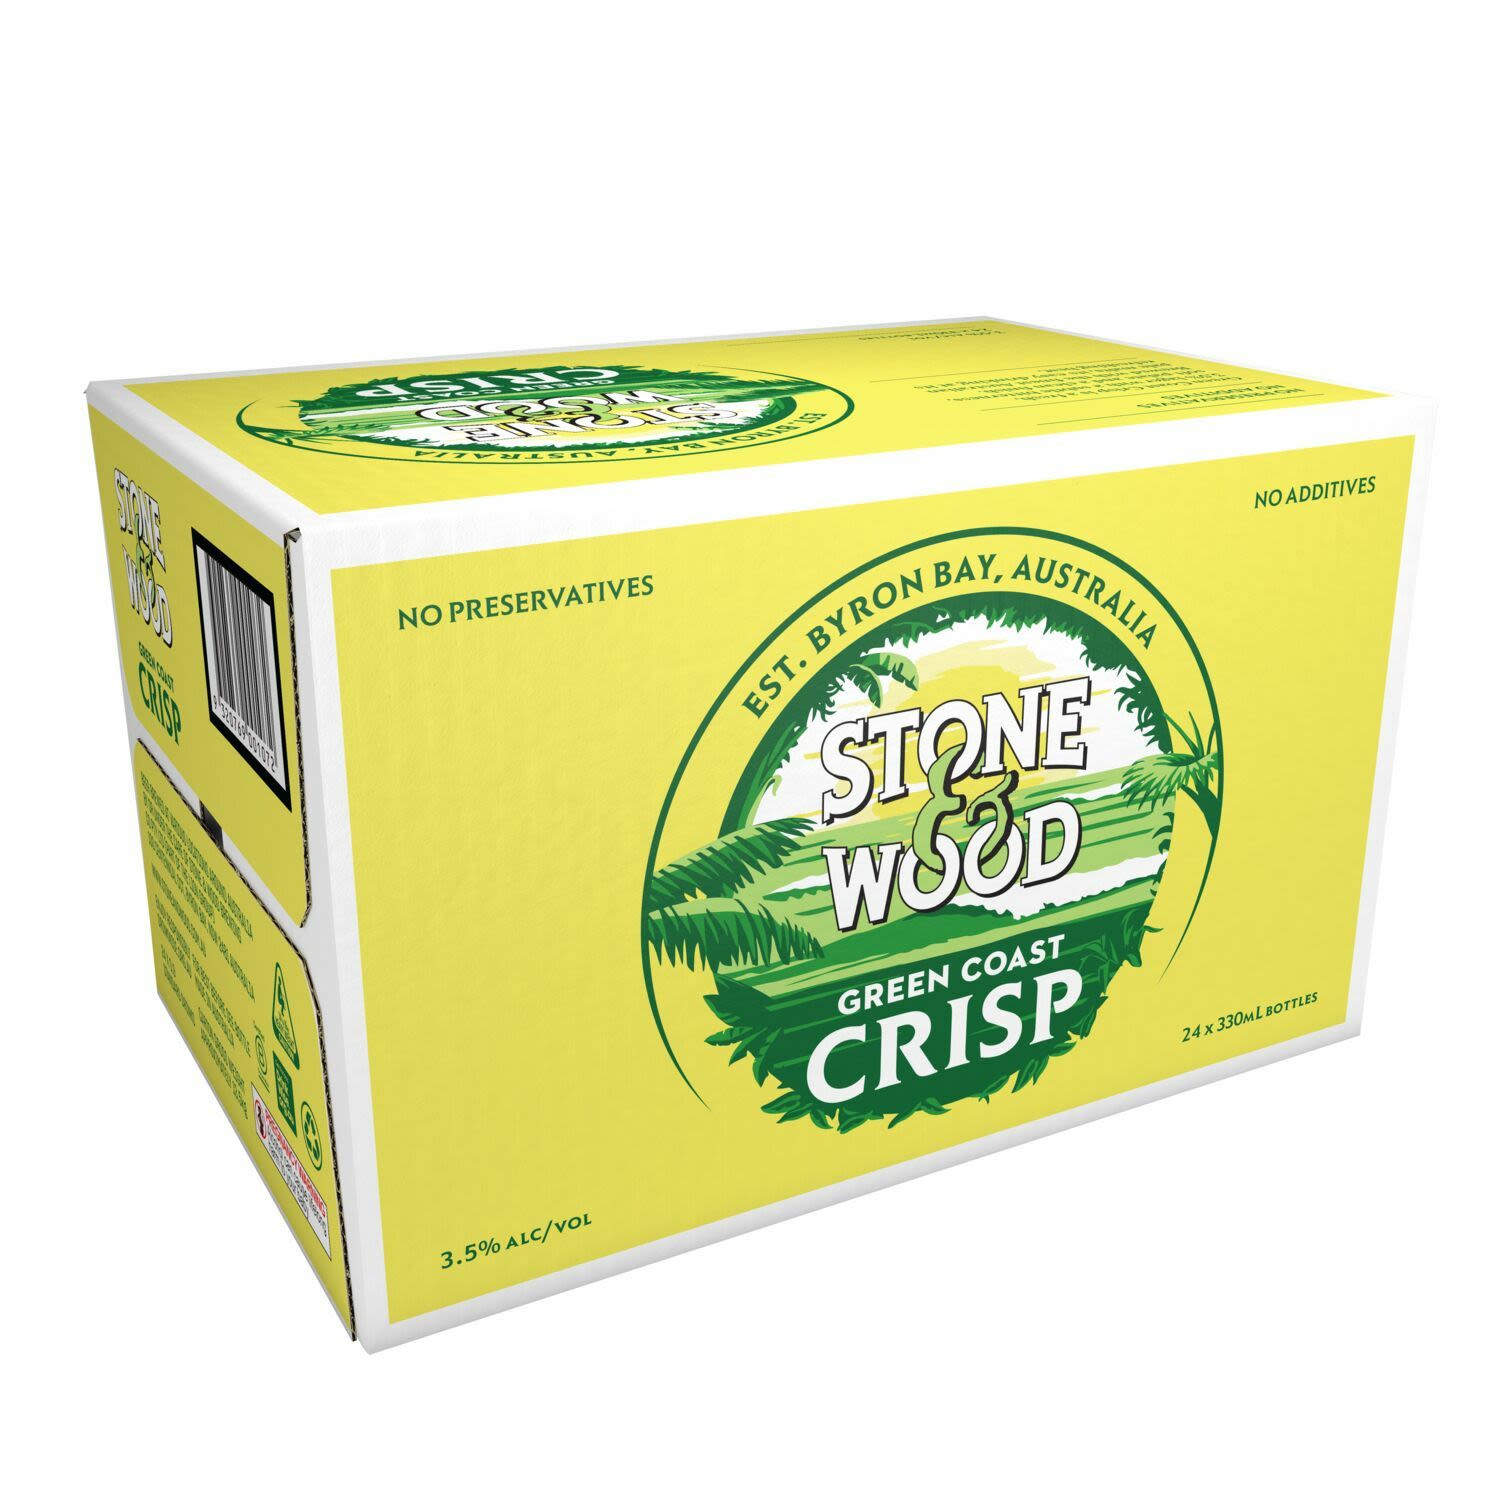 Stone & Wood Green Coast Crisp Mid Bottle 330mL 24 Pack